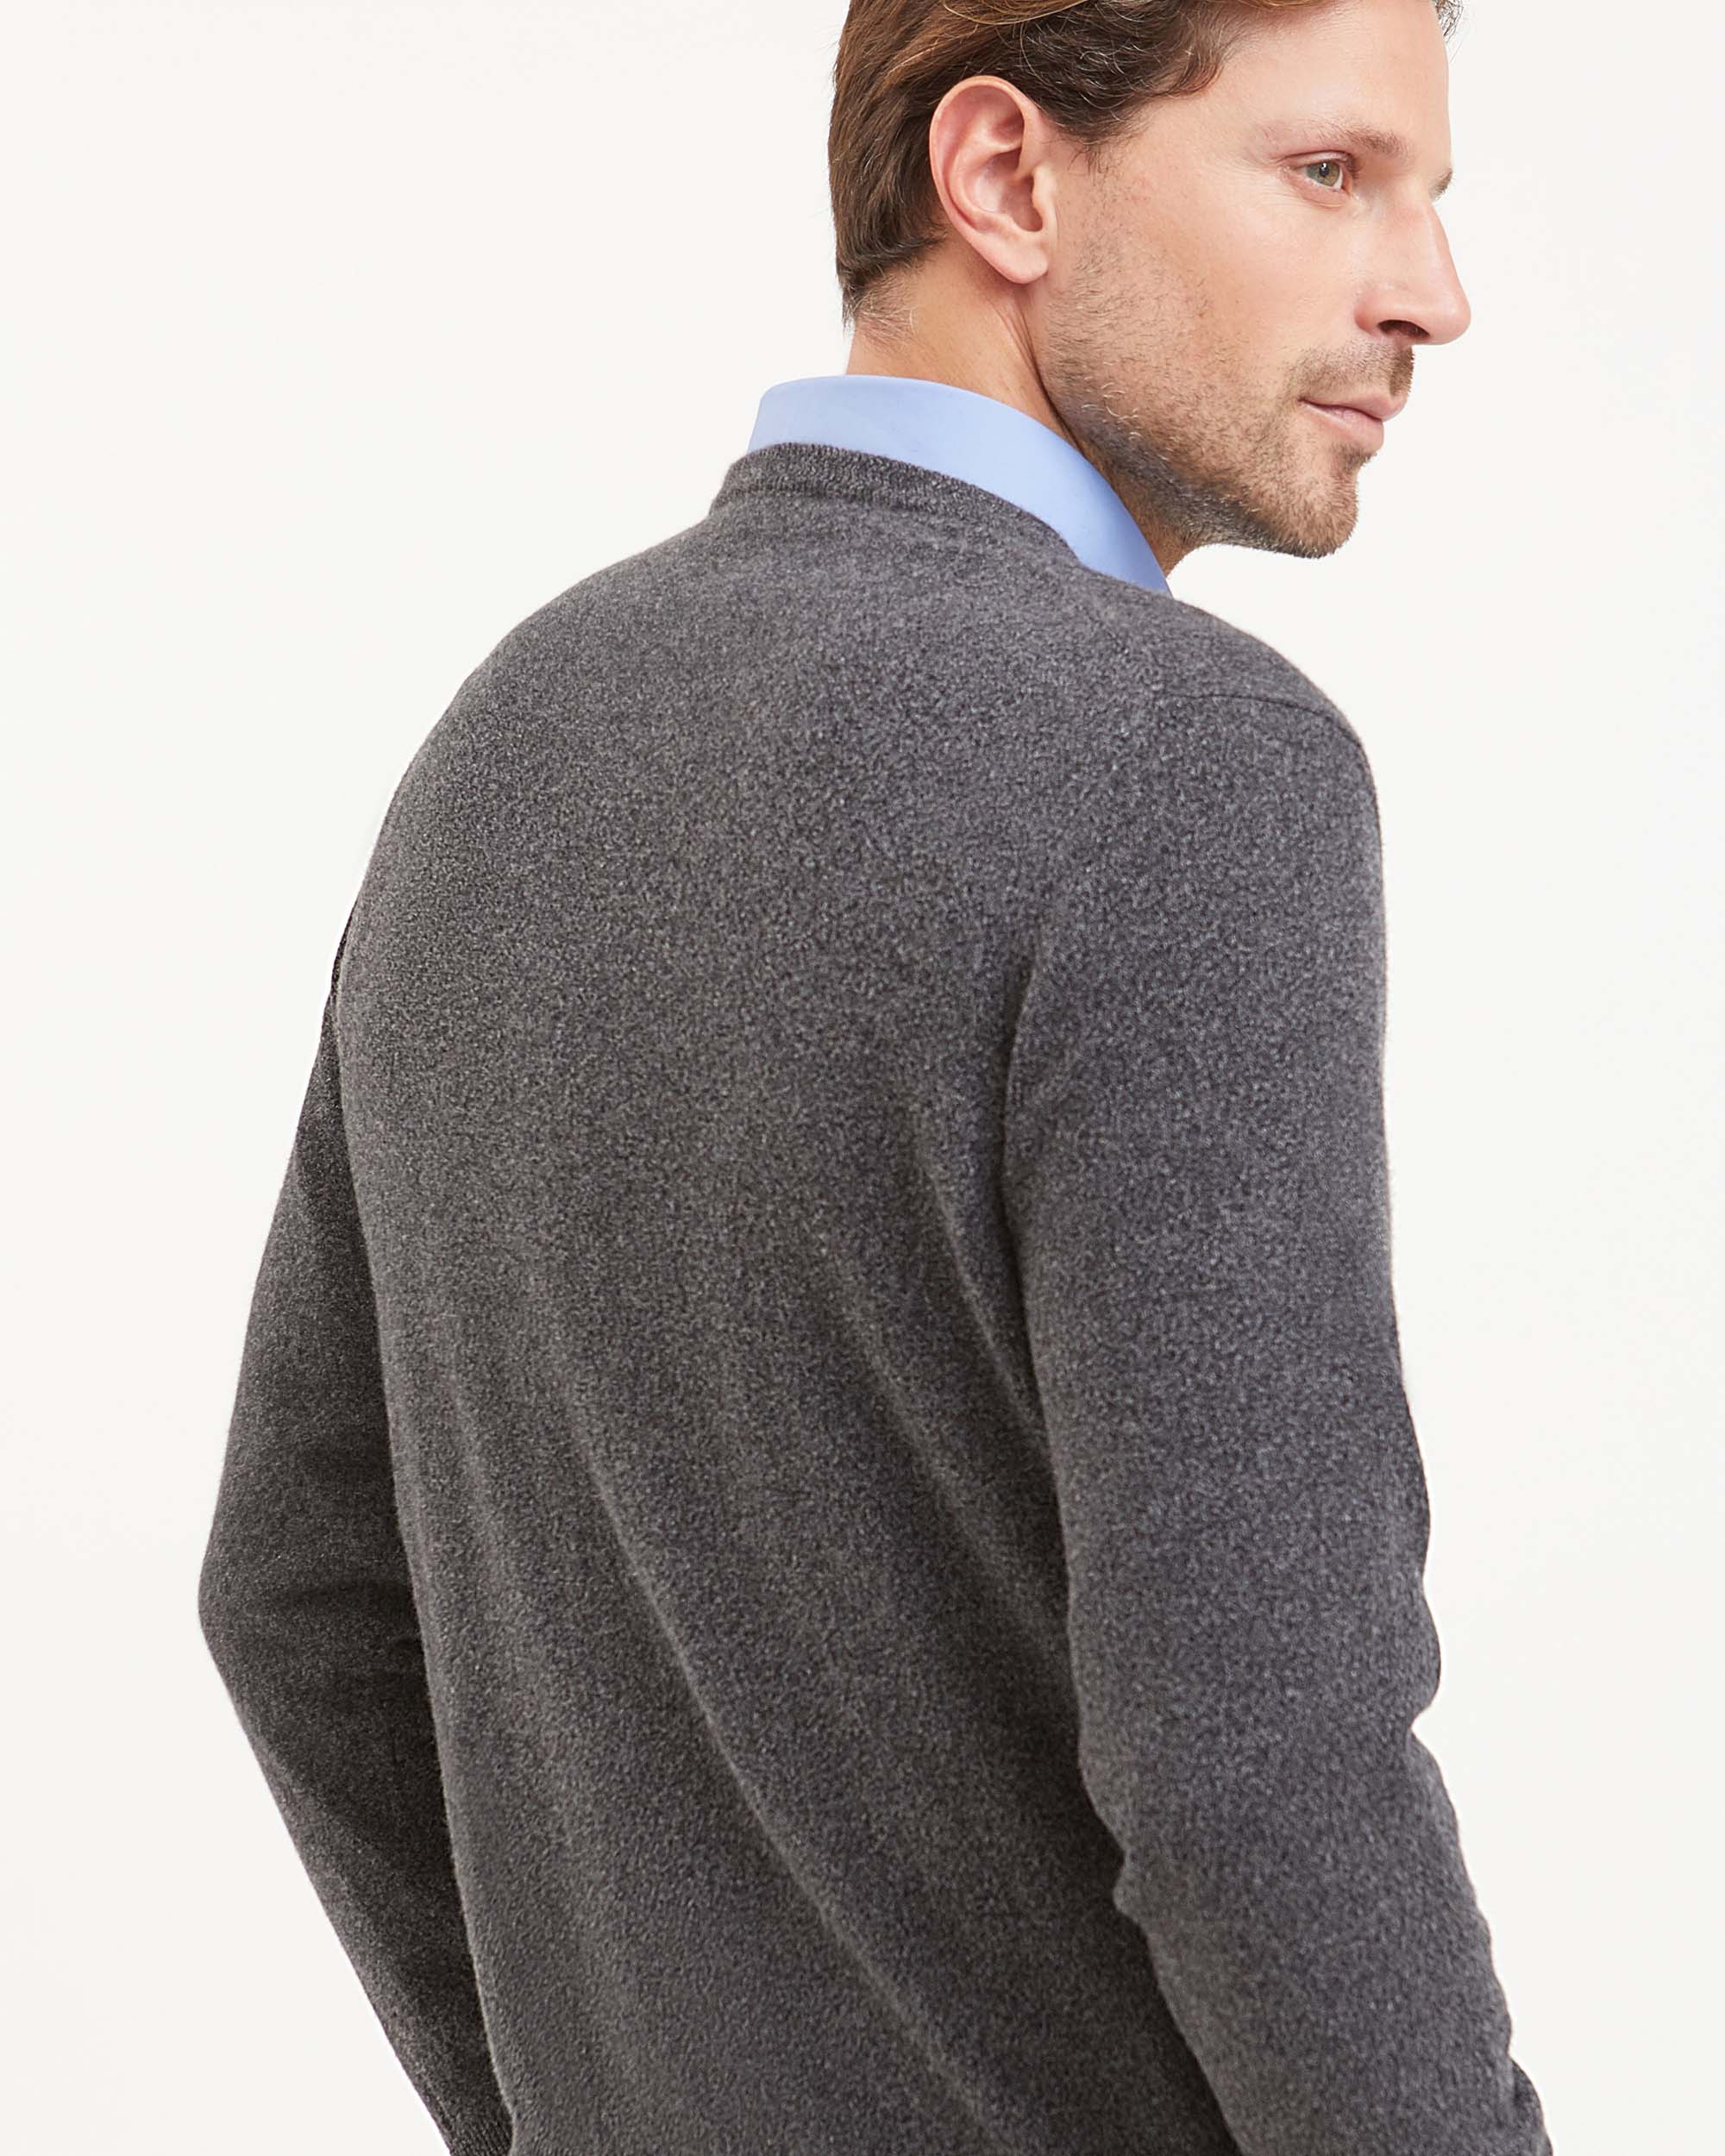 Grey kid cashmere V-neck sweater